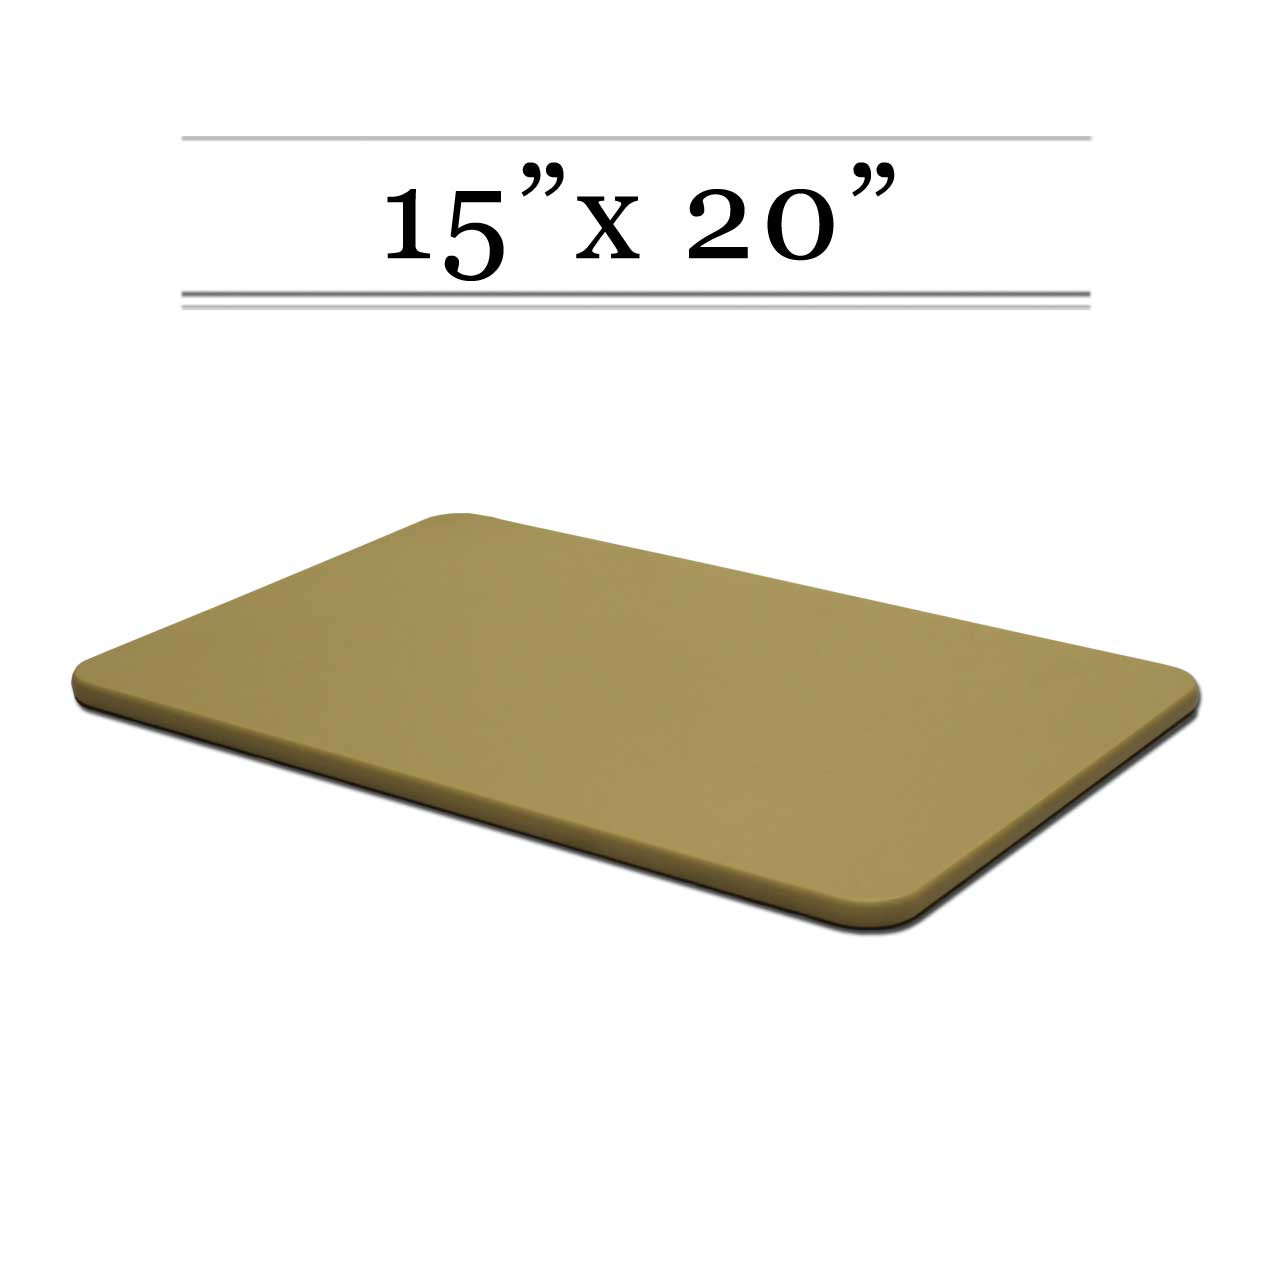 15 x 20 Brown Richlite Cutting Board